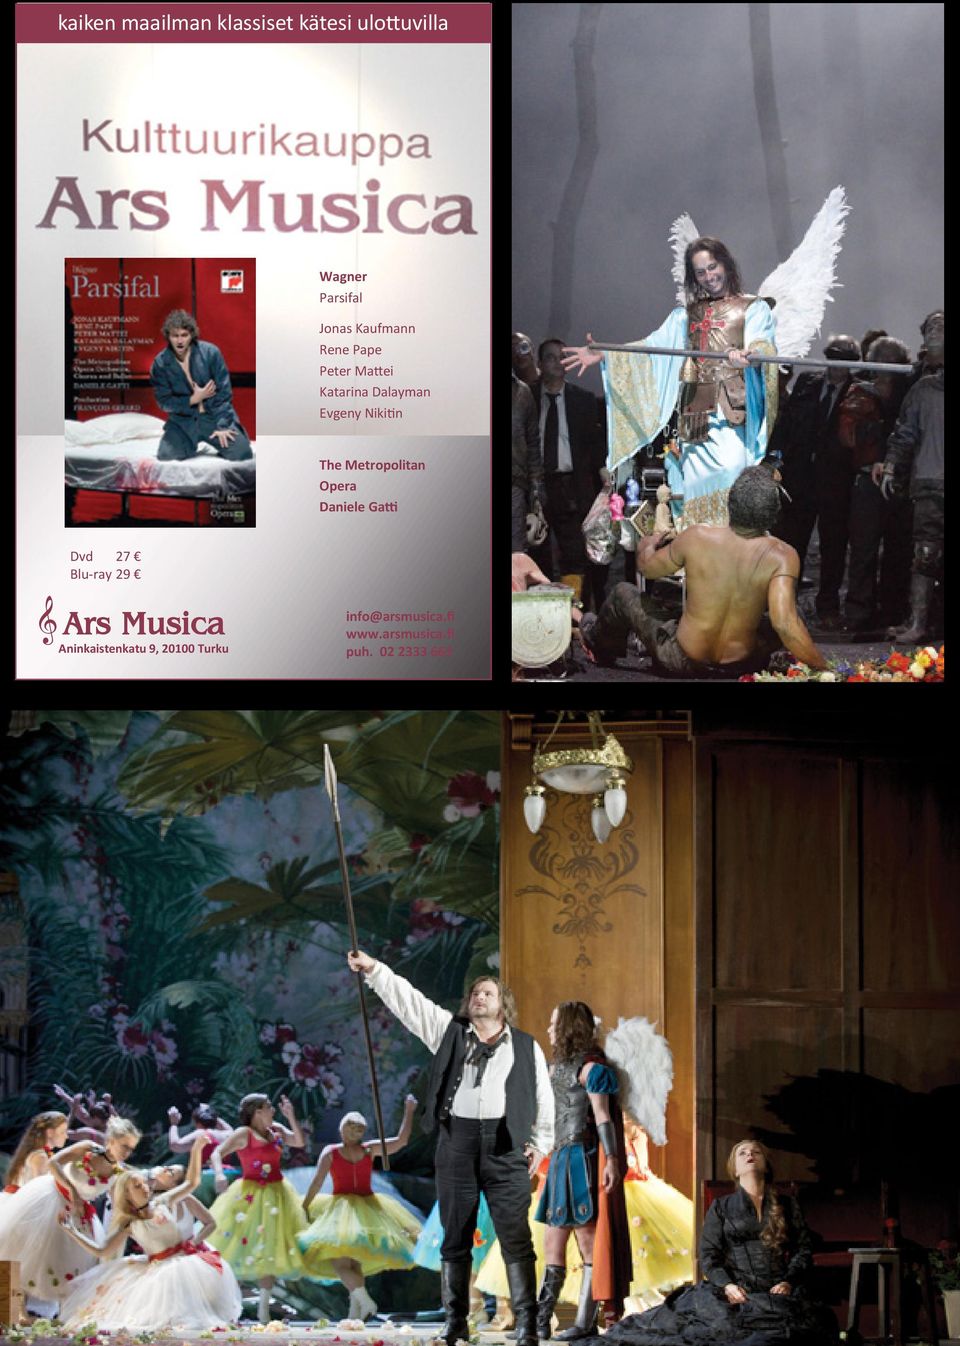 Metropolitan Opera Daniele Gatti Dvd 27 Blu-ray 29 &Ars Musica